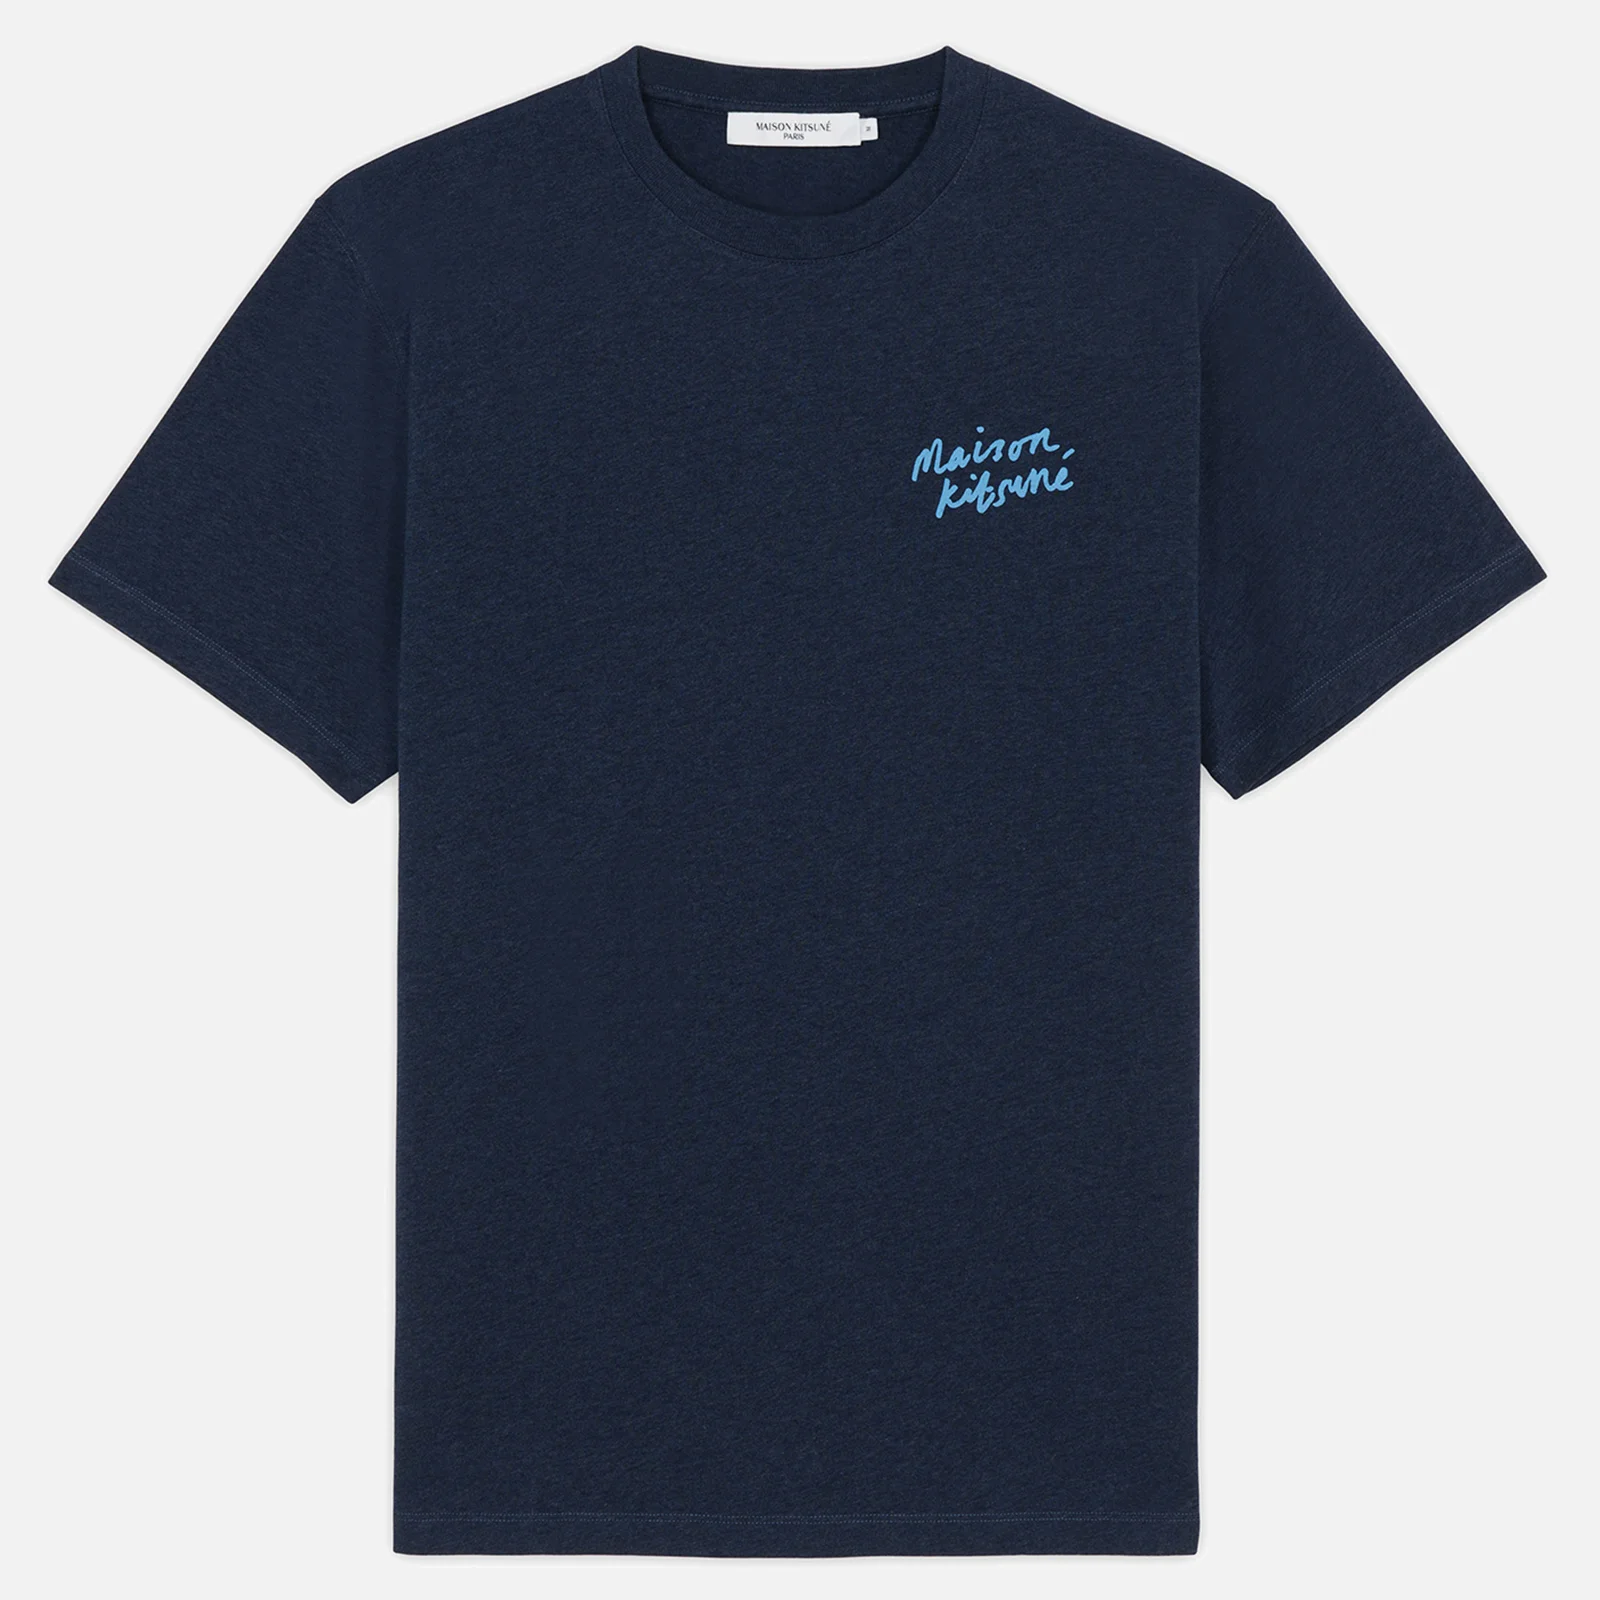 Maison Kitsuné Men's Mini Handwriting T-Shirt - Navy Melange Image 1